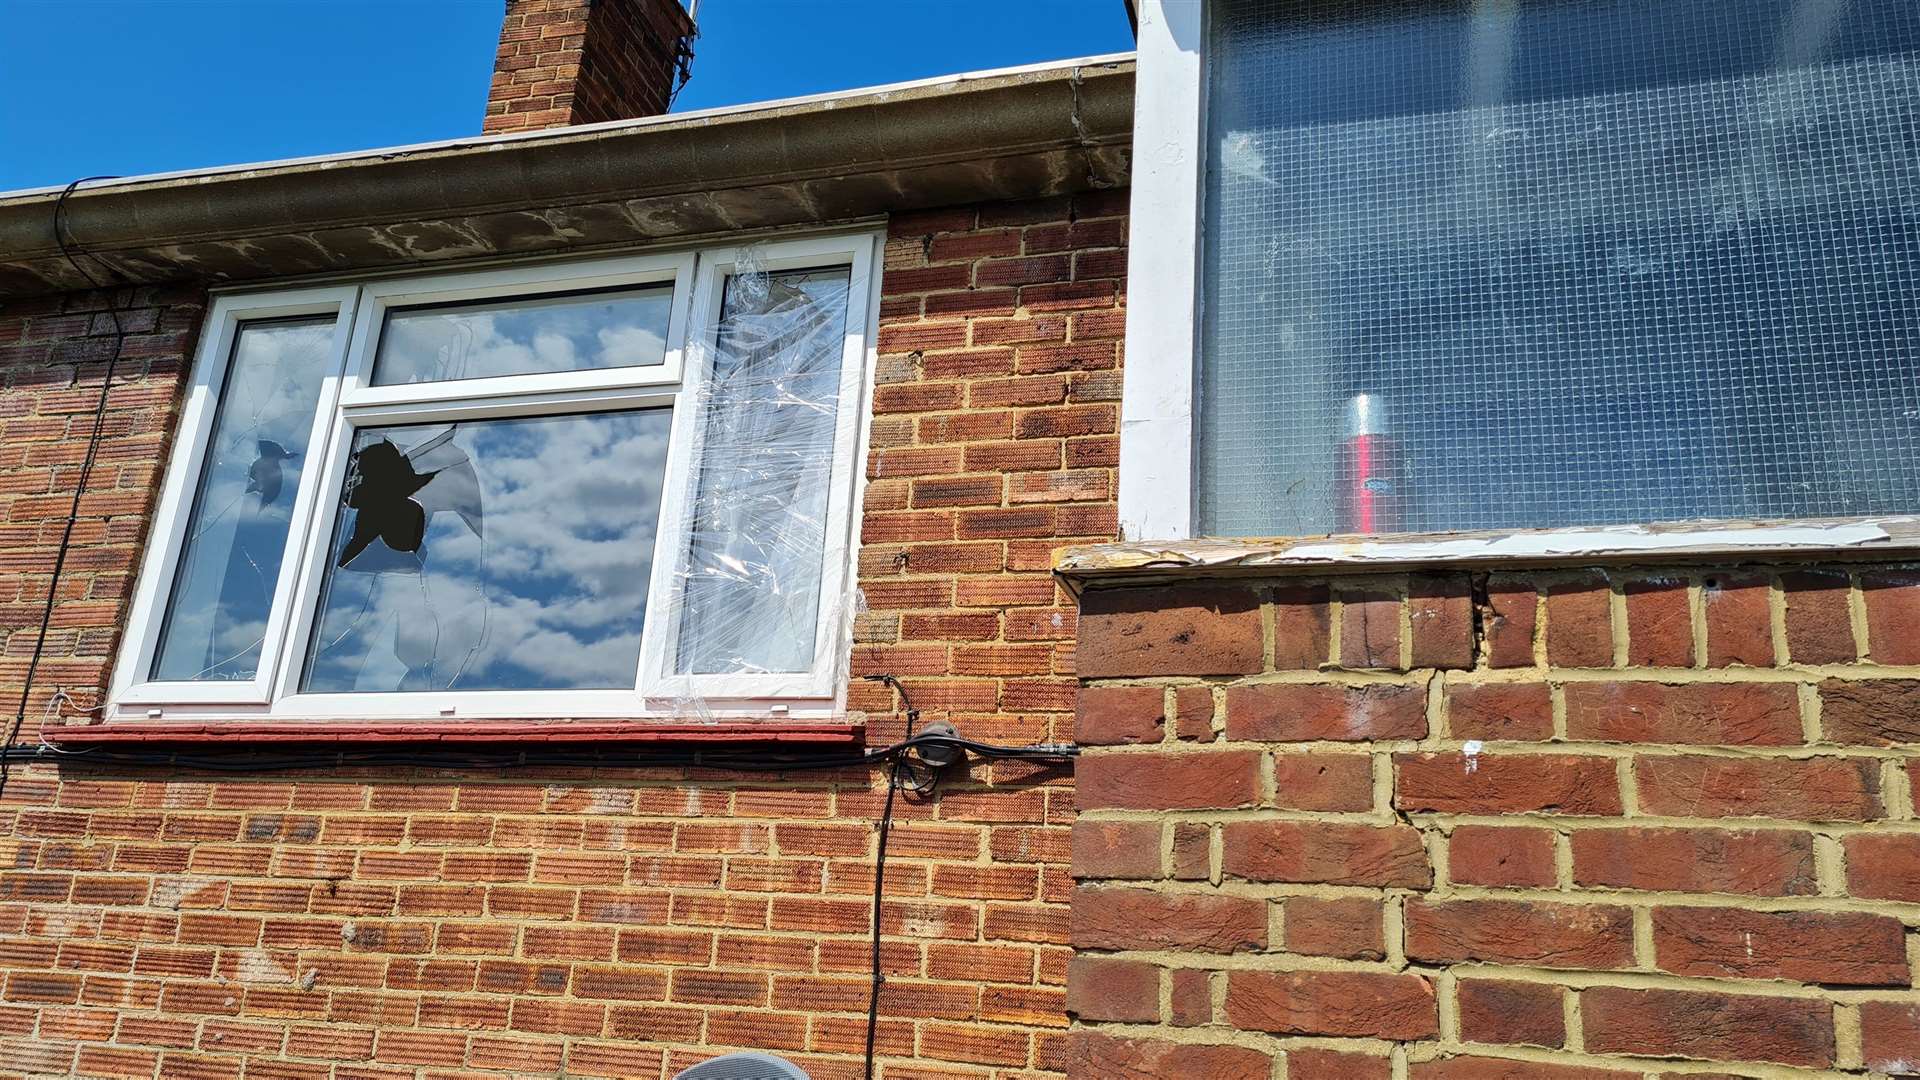 A broken window at the flat